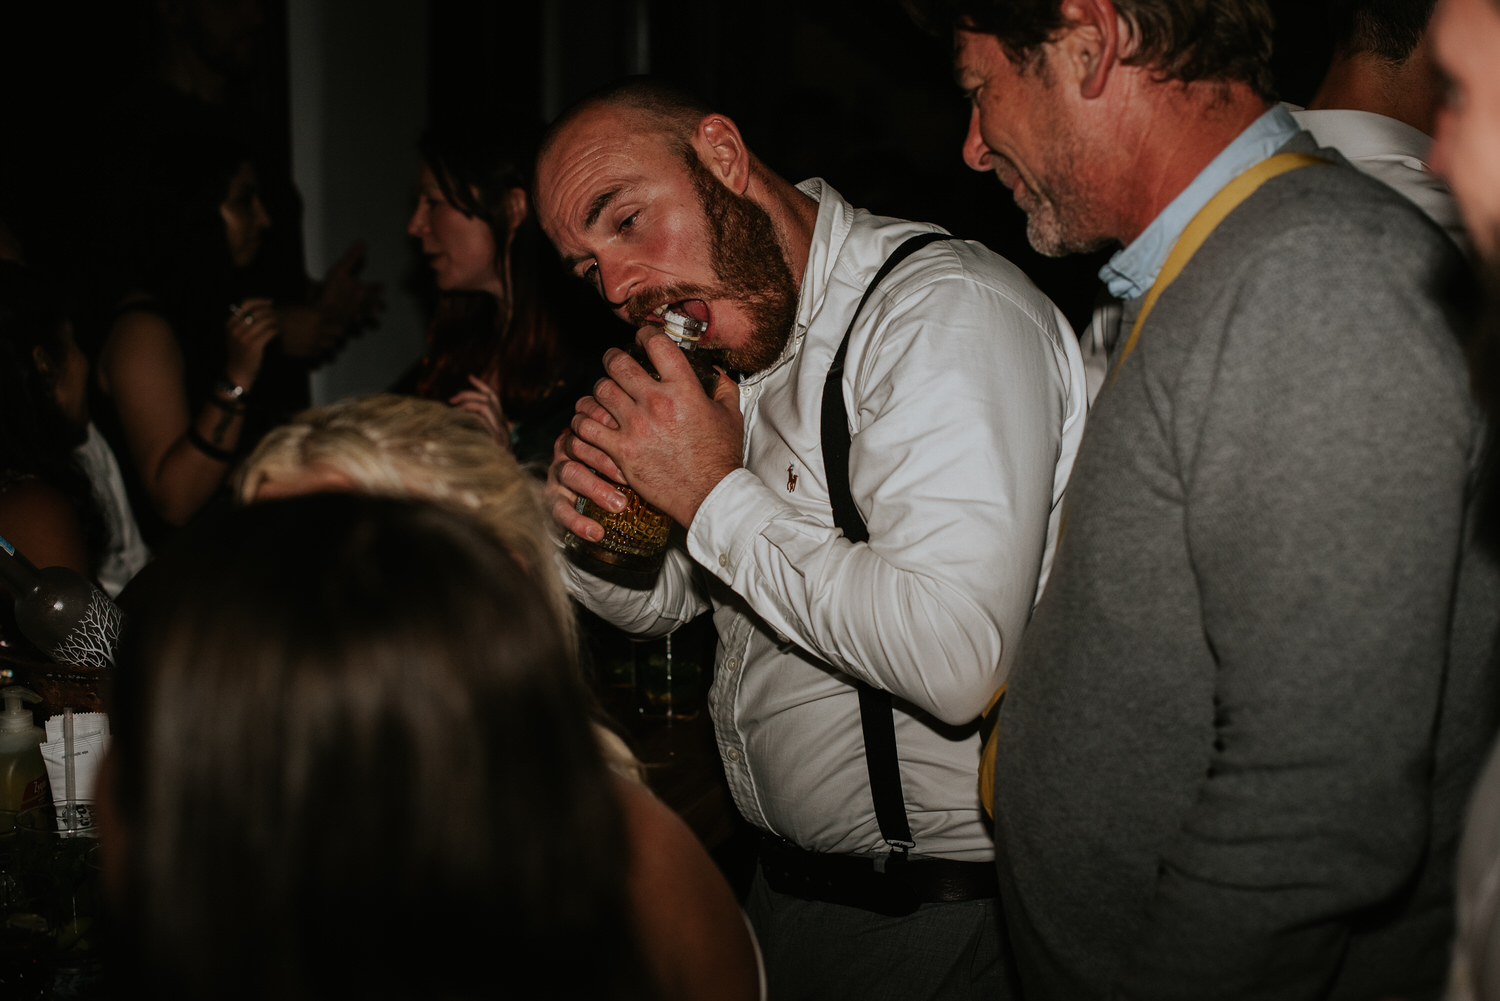 Mykonos wedding photographer: wedding guest skilfully opening a bottle with his teeth on dance floor for Mykonos wedding celebration.